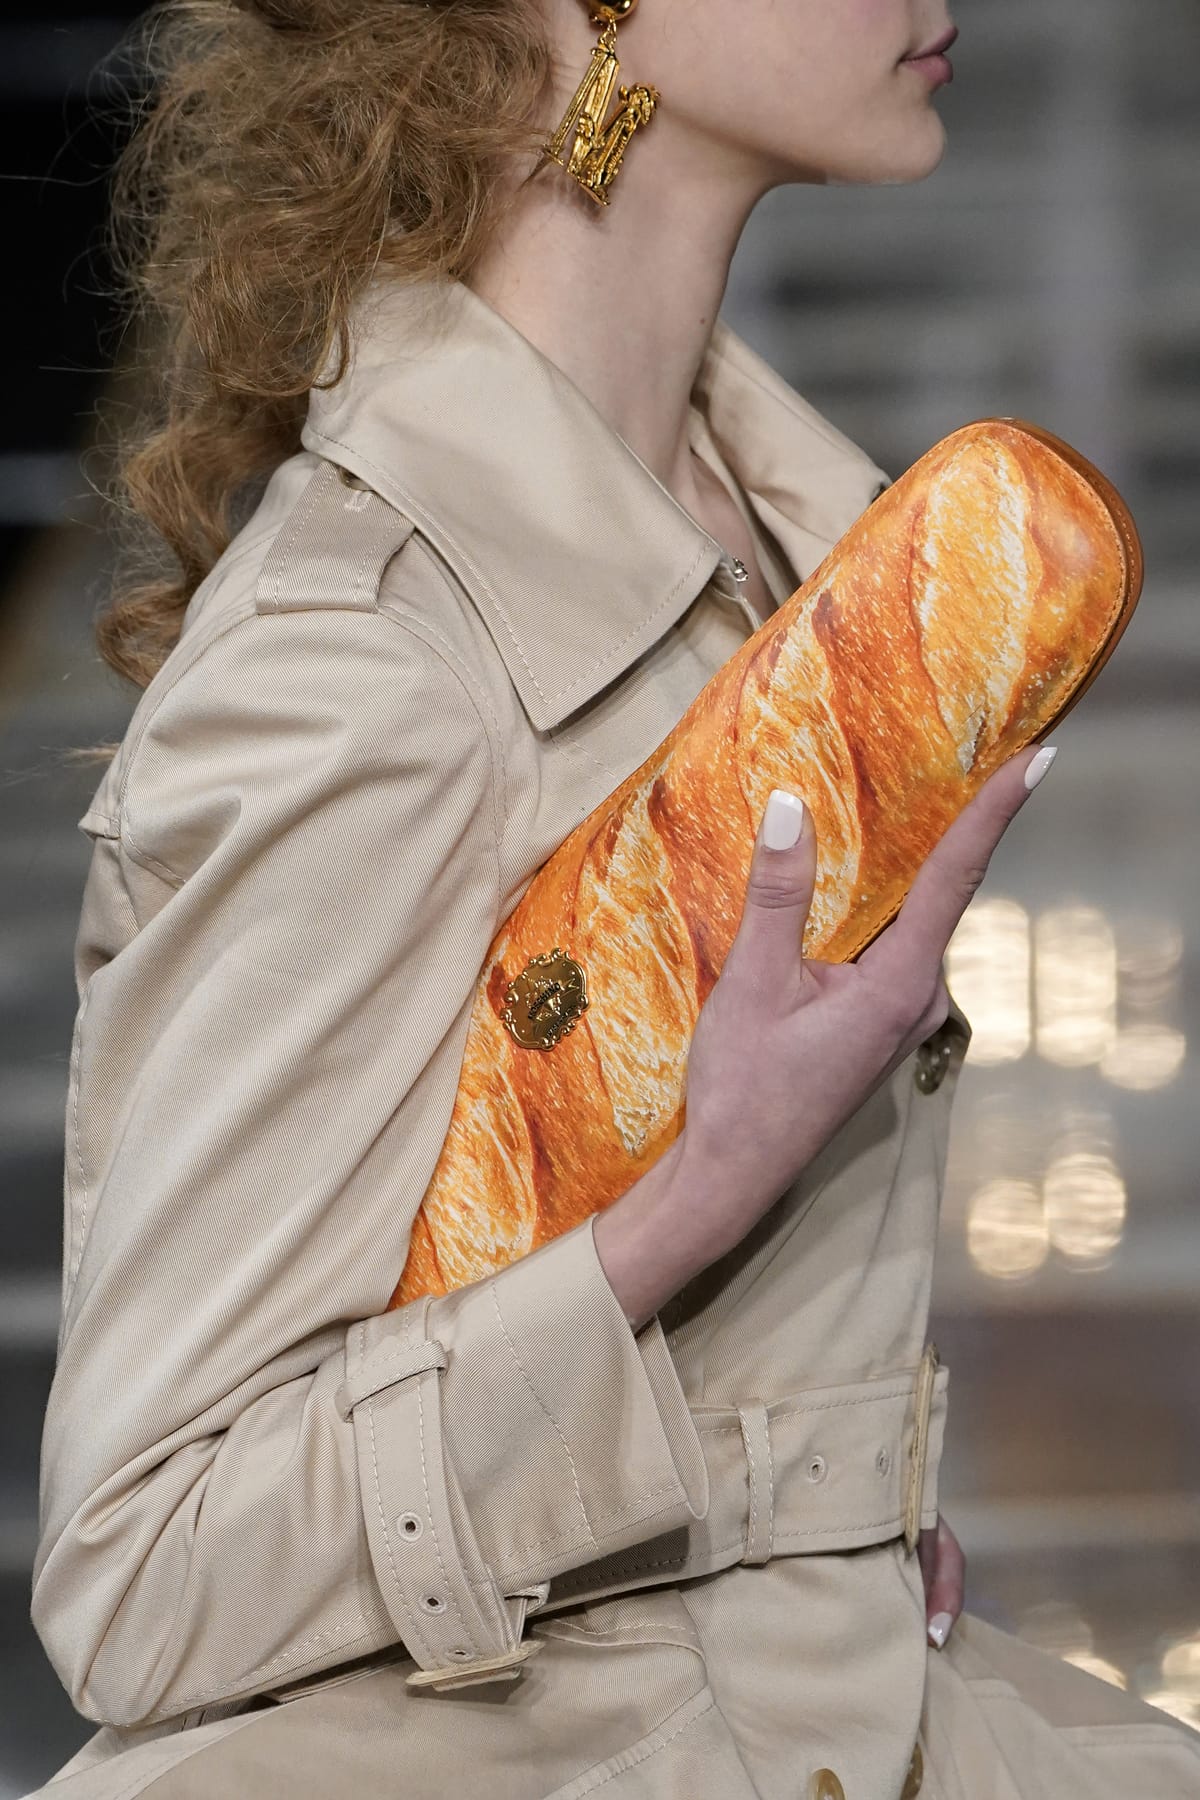 baguette bread purse